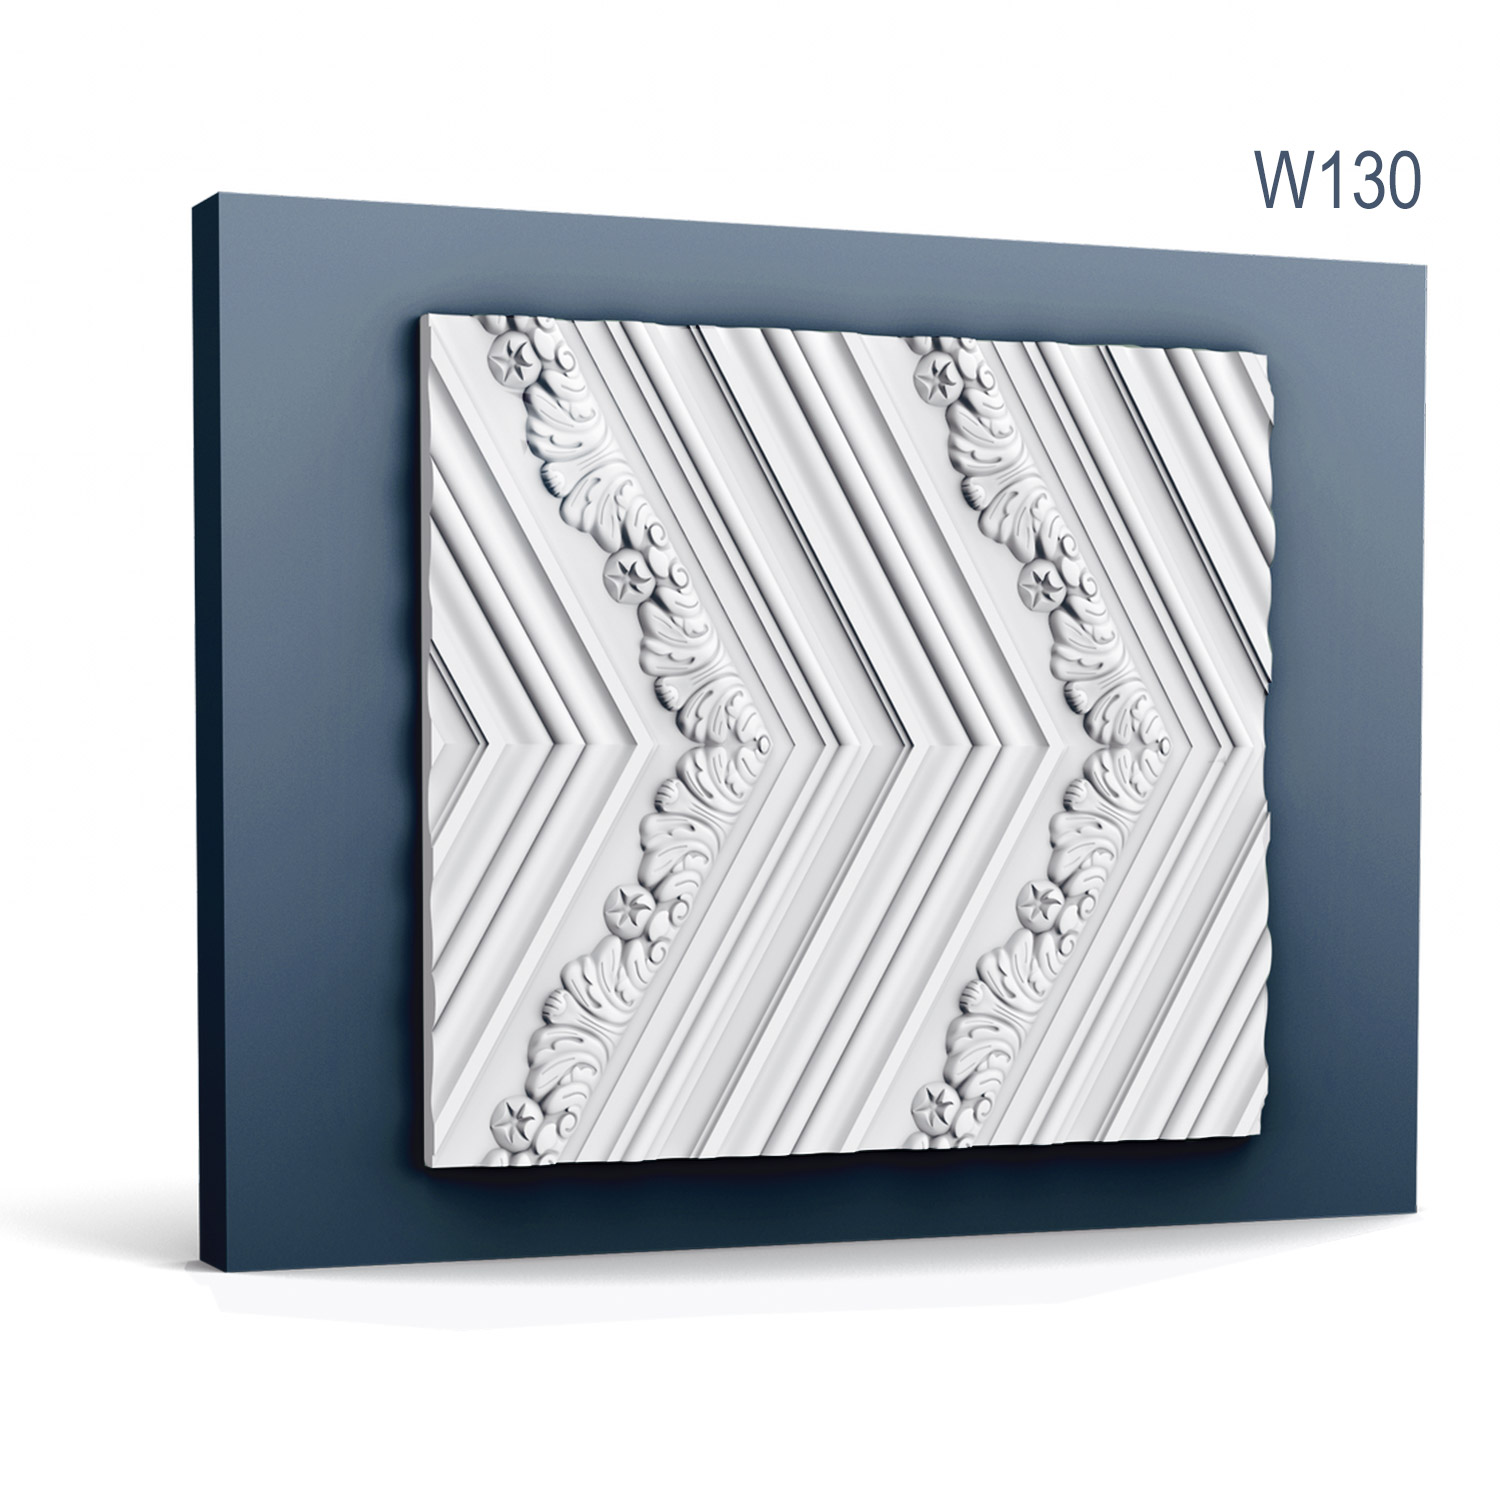 Panou 3D decorativ W130 CHEVRON pentru perete / tavan, stil art deco, rigid, ornamental, Belgia, vopsibil, din poliuretan de inalta densitate, L 200 x H 40 x L 2 cm